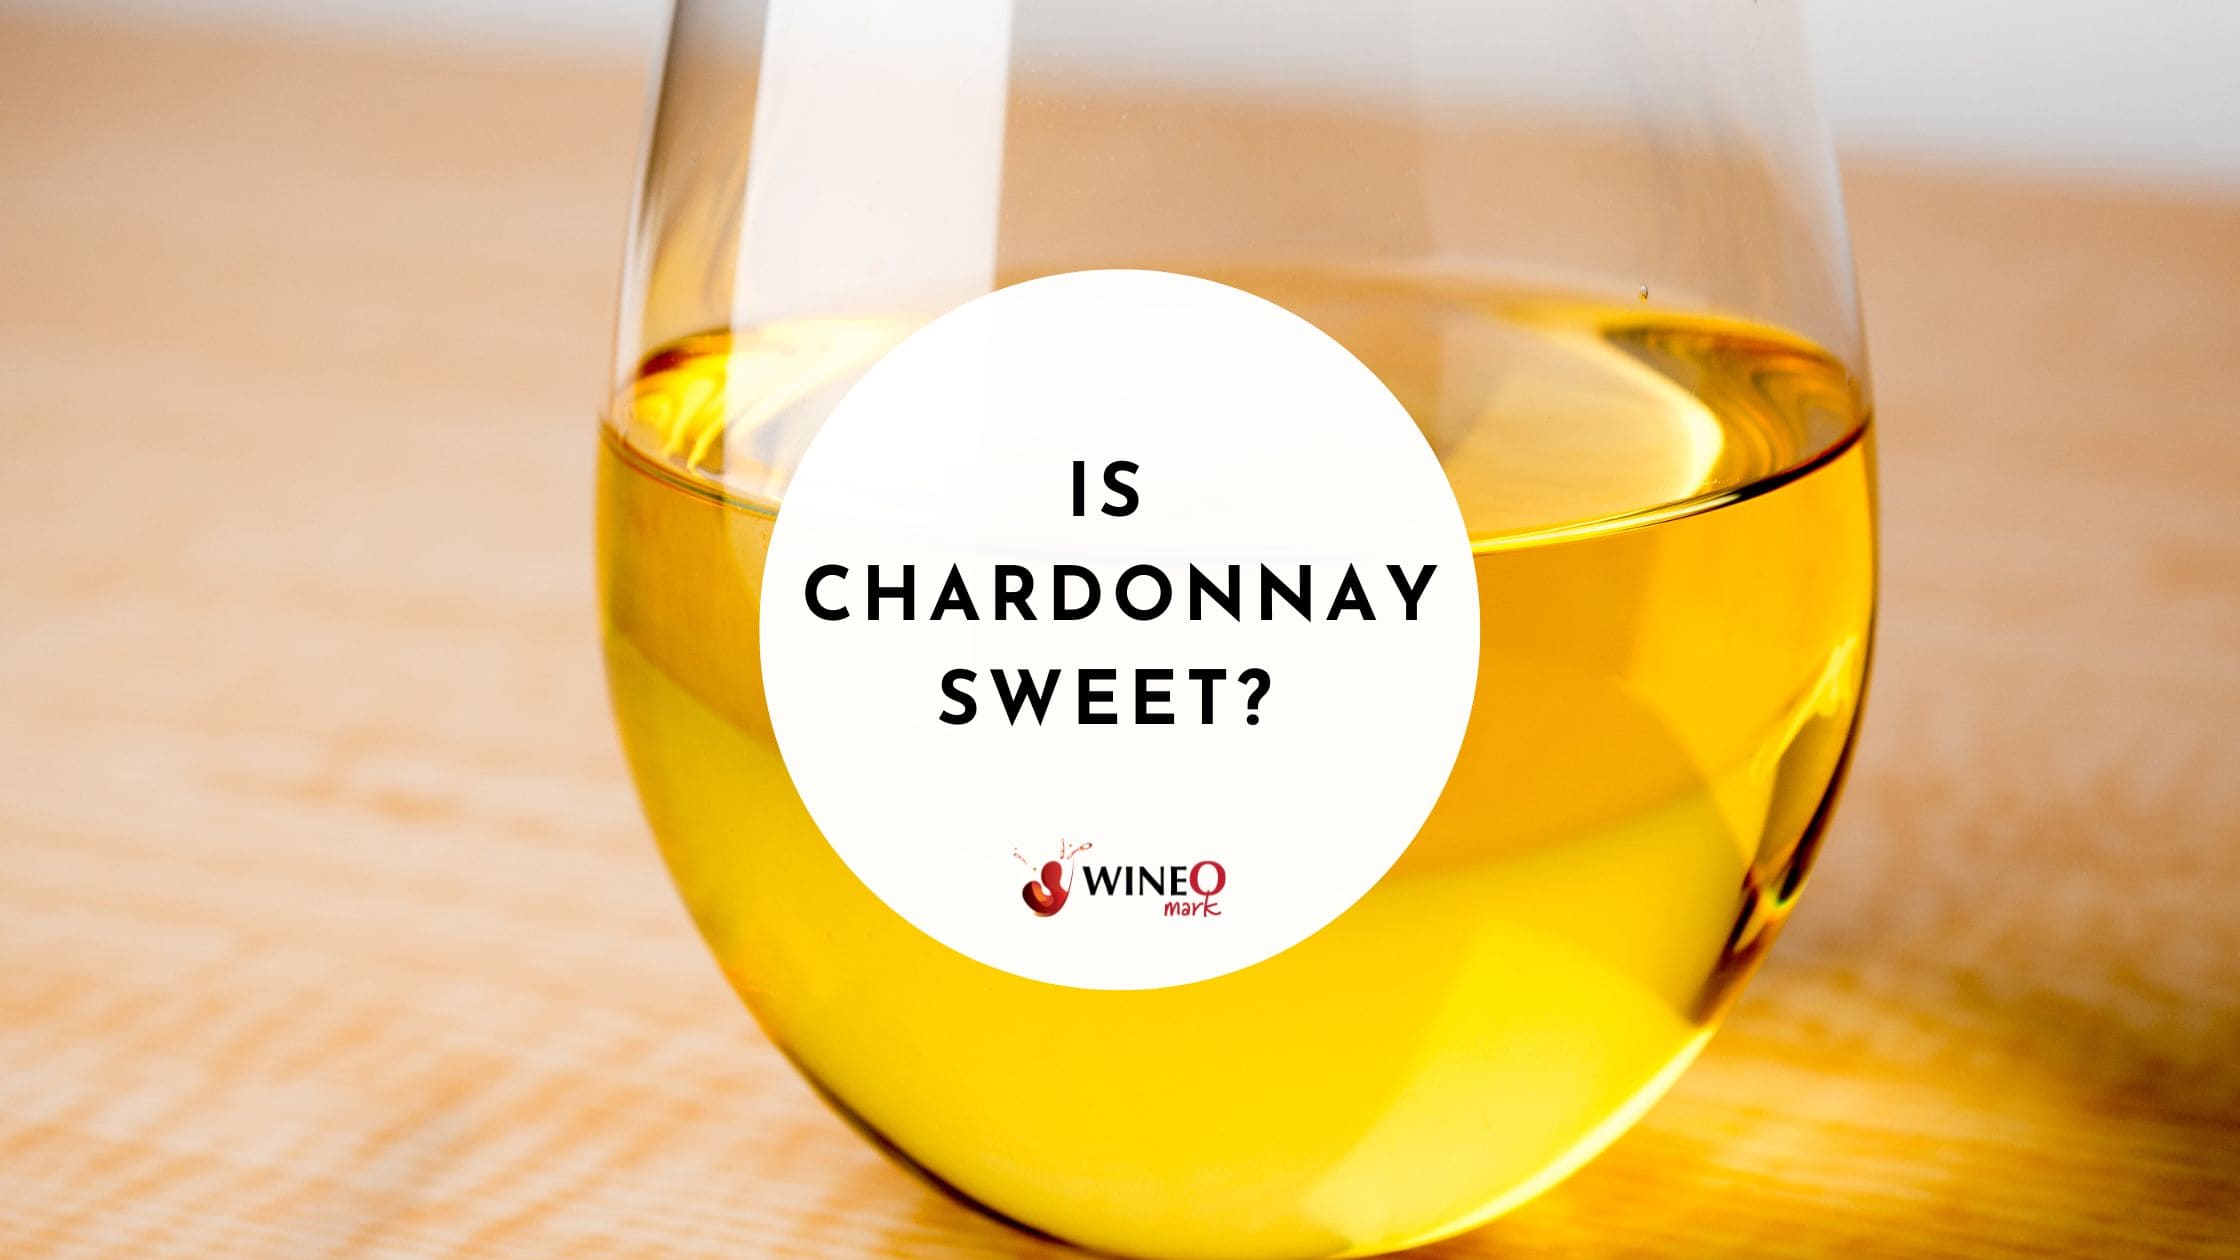 https://www.wineomark.com/wp-content/uploads/2022/08/is-chardonnay-sweet.jpg